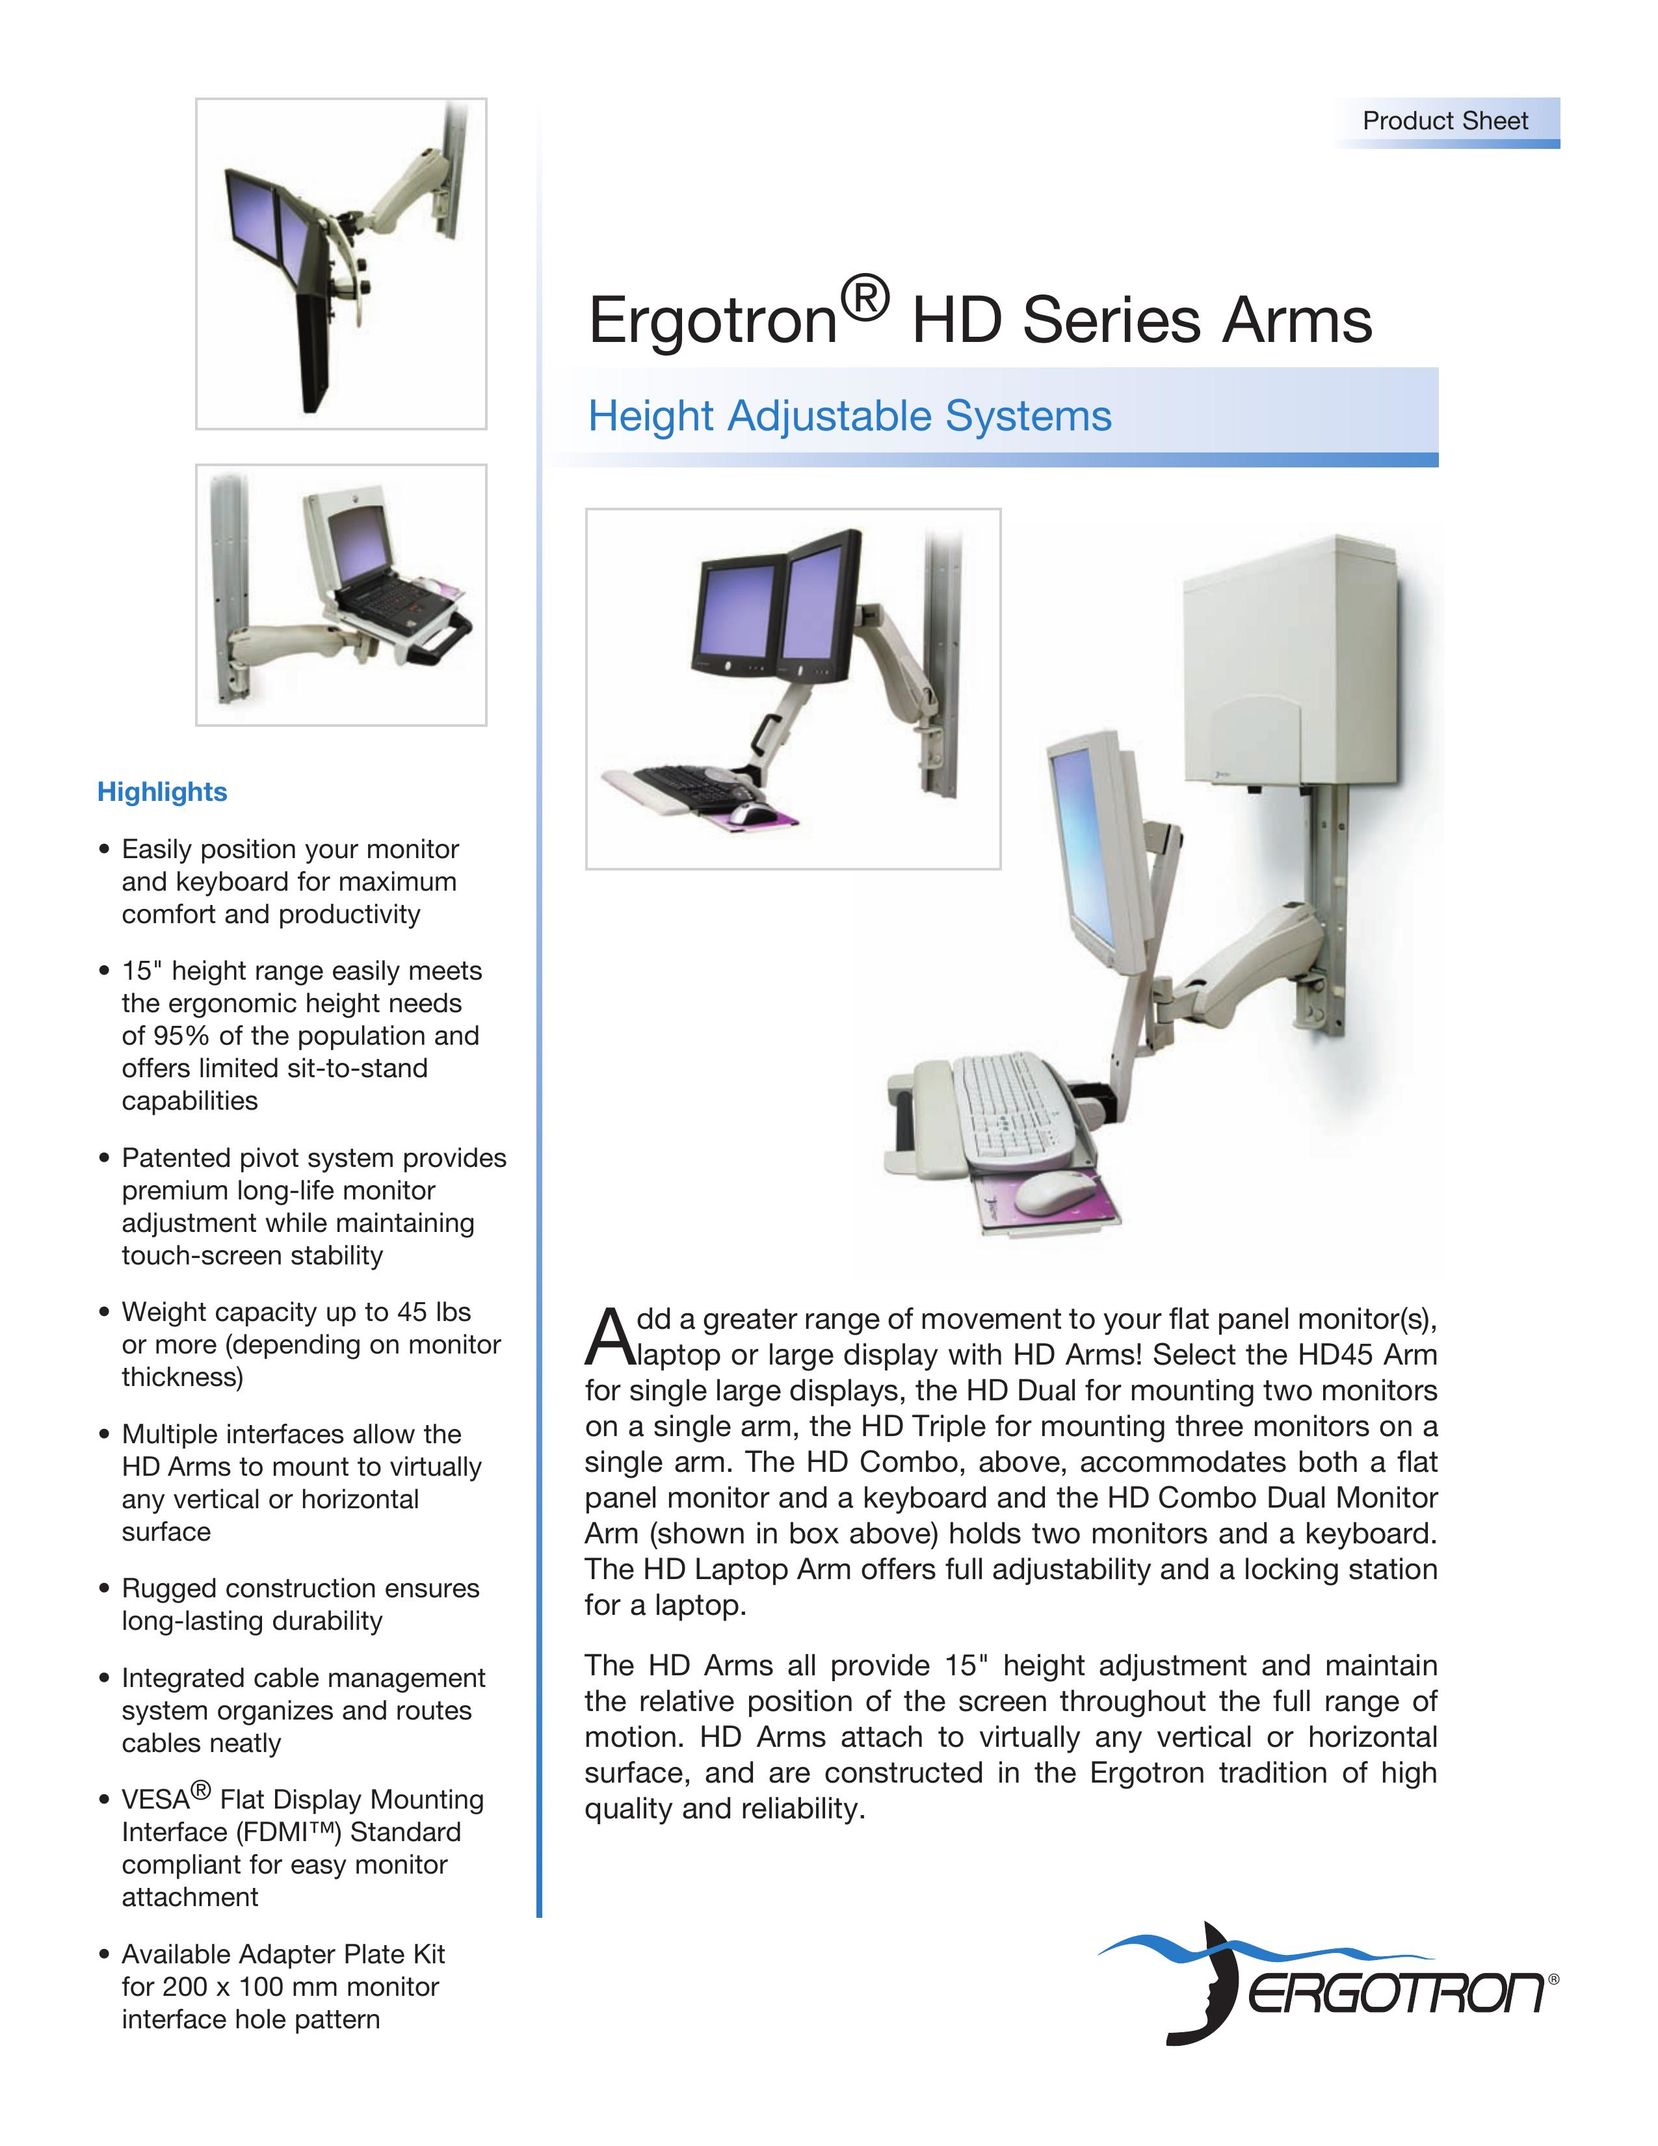 Ergotron HD Series Arms Laptop User Manual